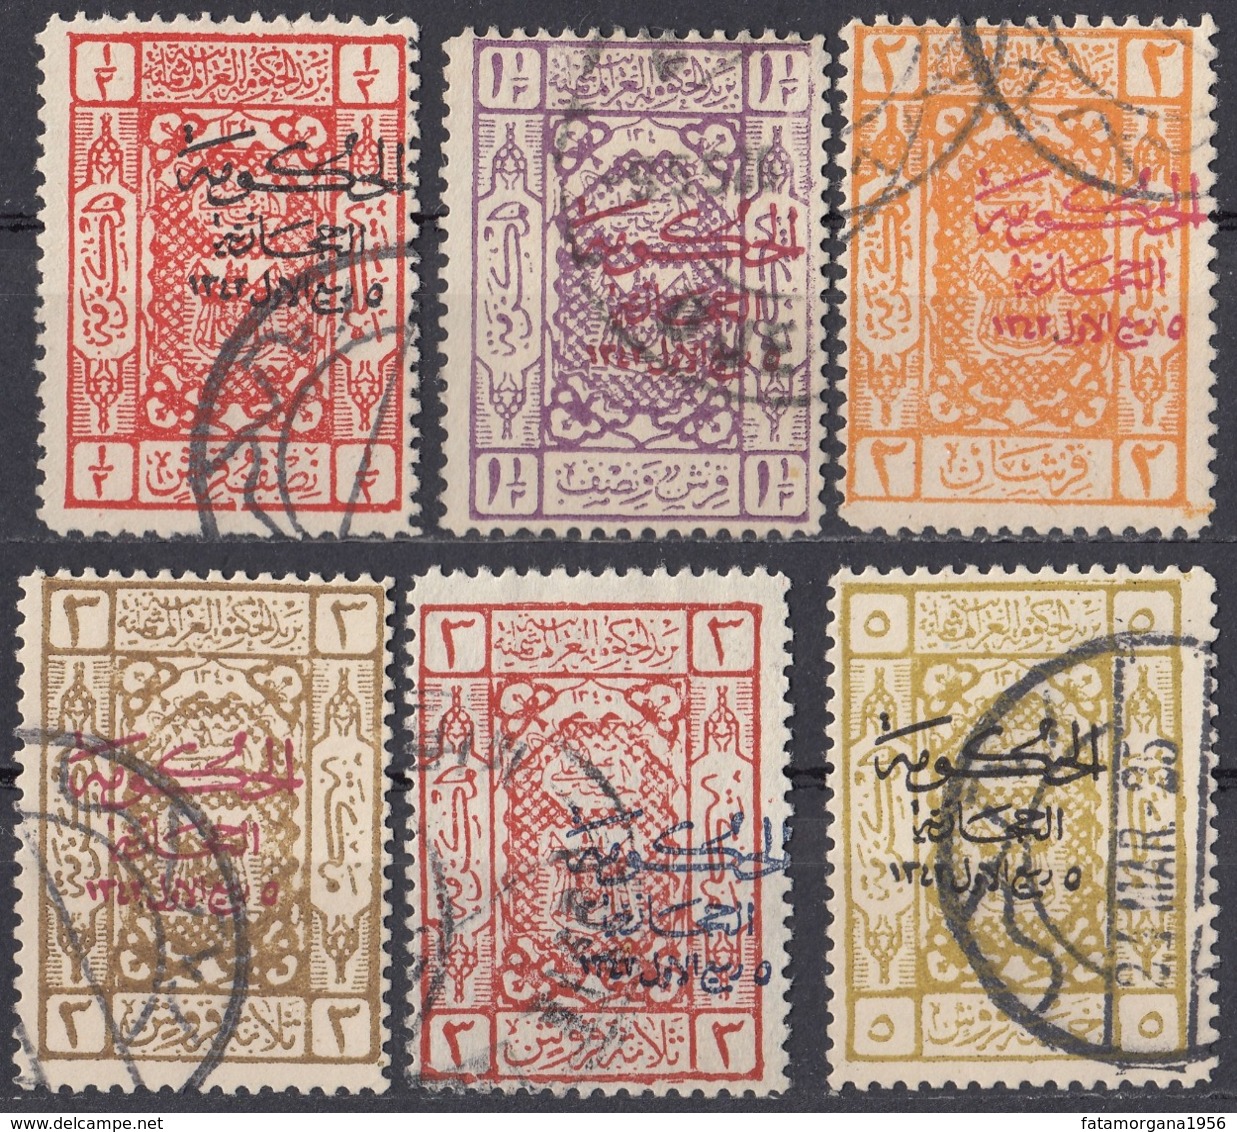 ARABIA SAUDITA, Regno Di Hedjaz - 1924 - Lotto Composto Da 6 Valori Usati: Yvert  47 E 49/53. - Arabia Saudita